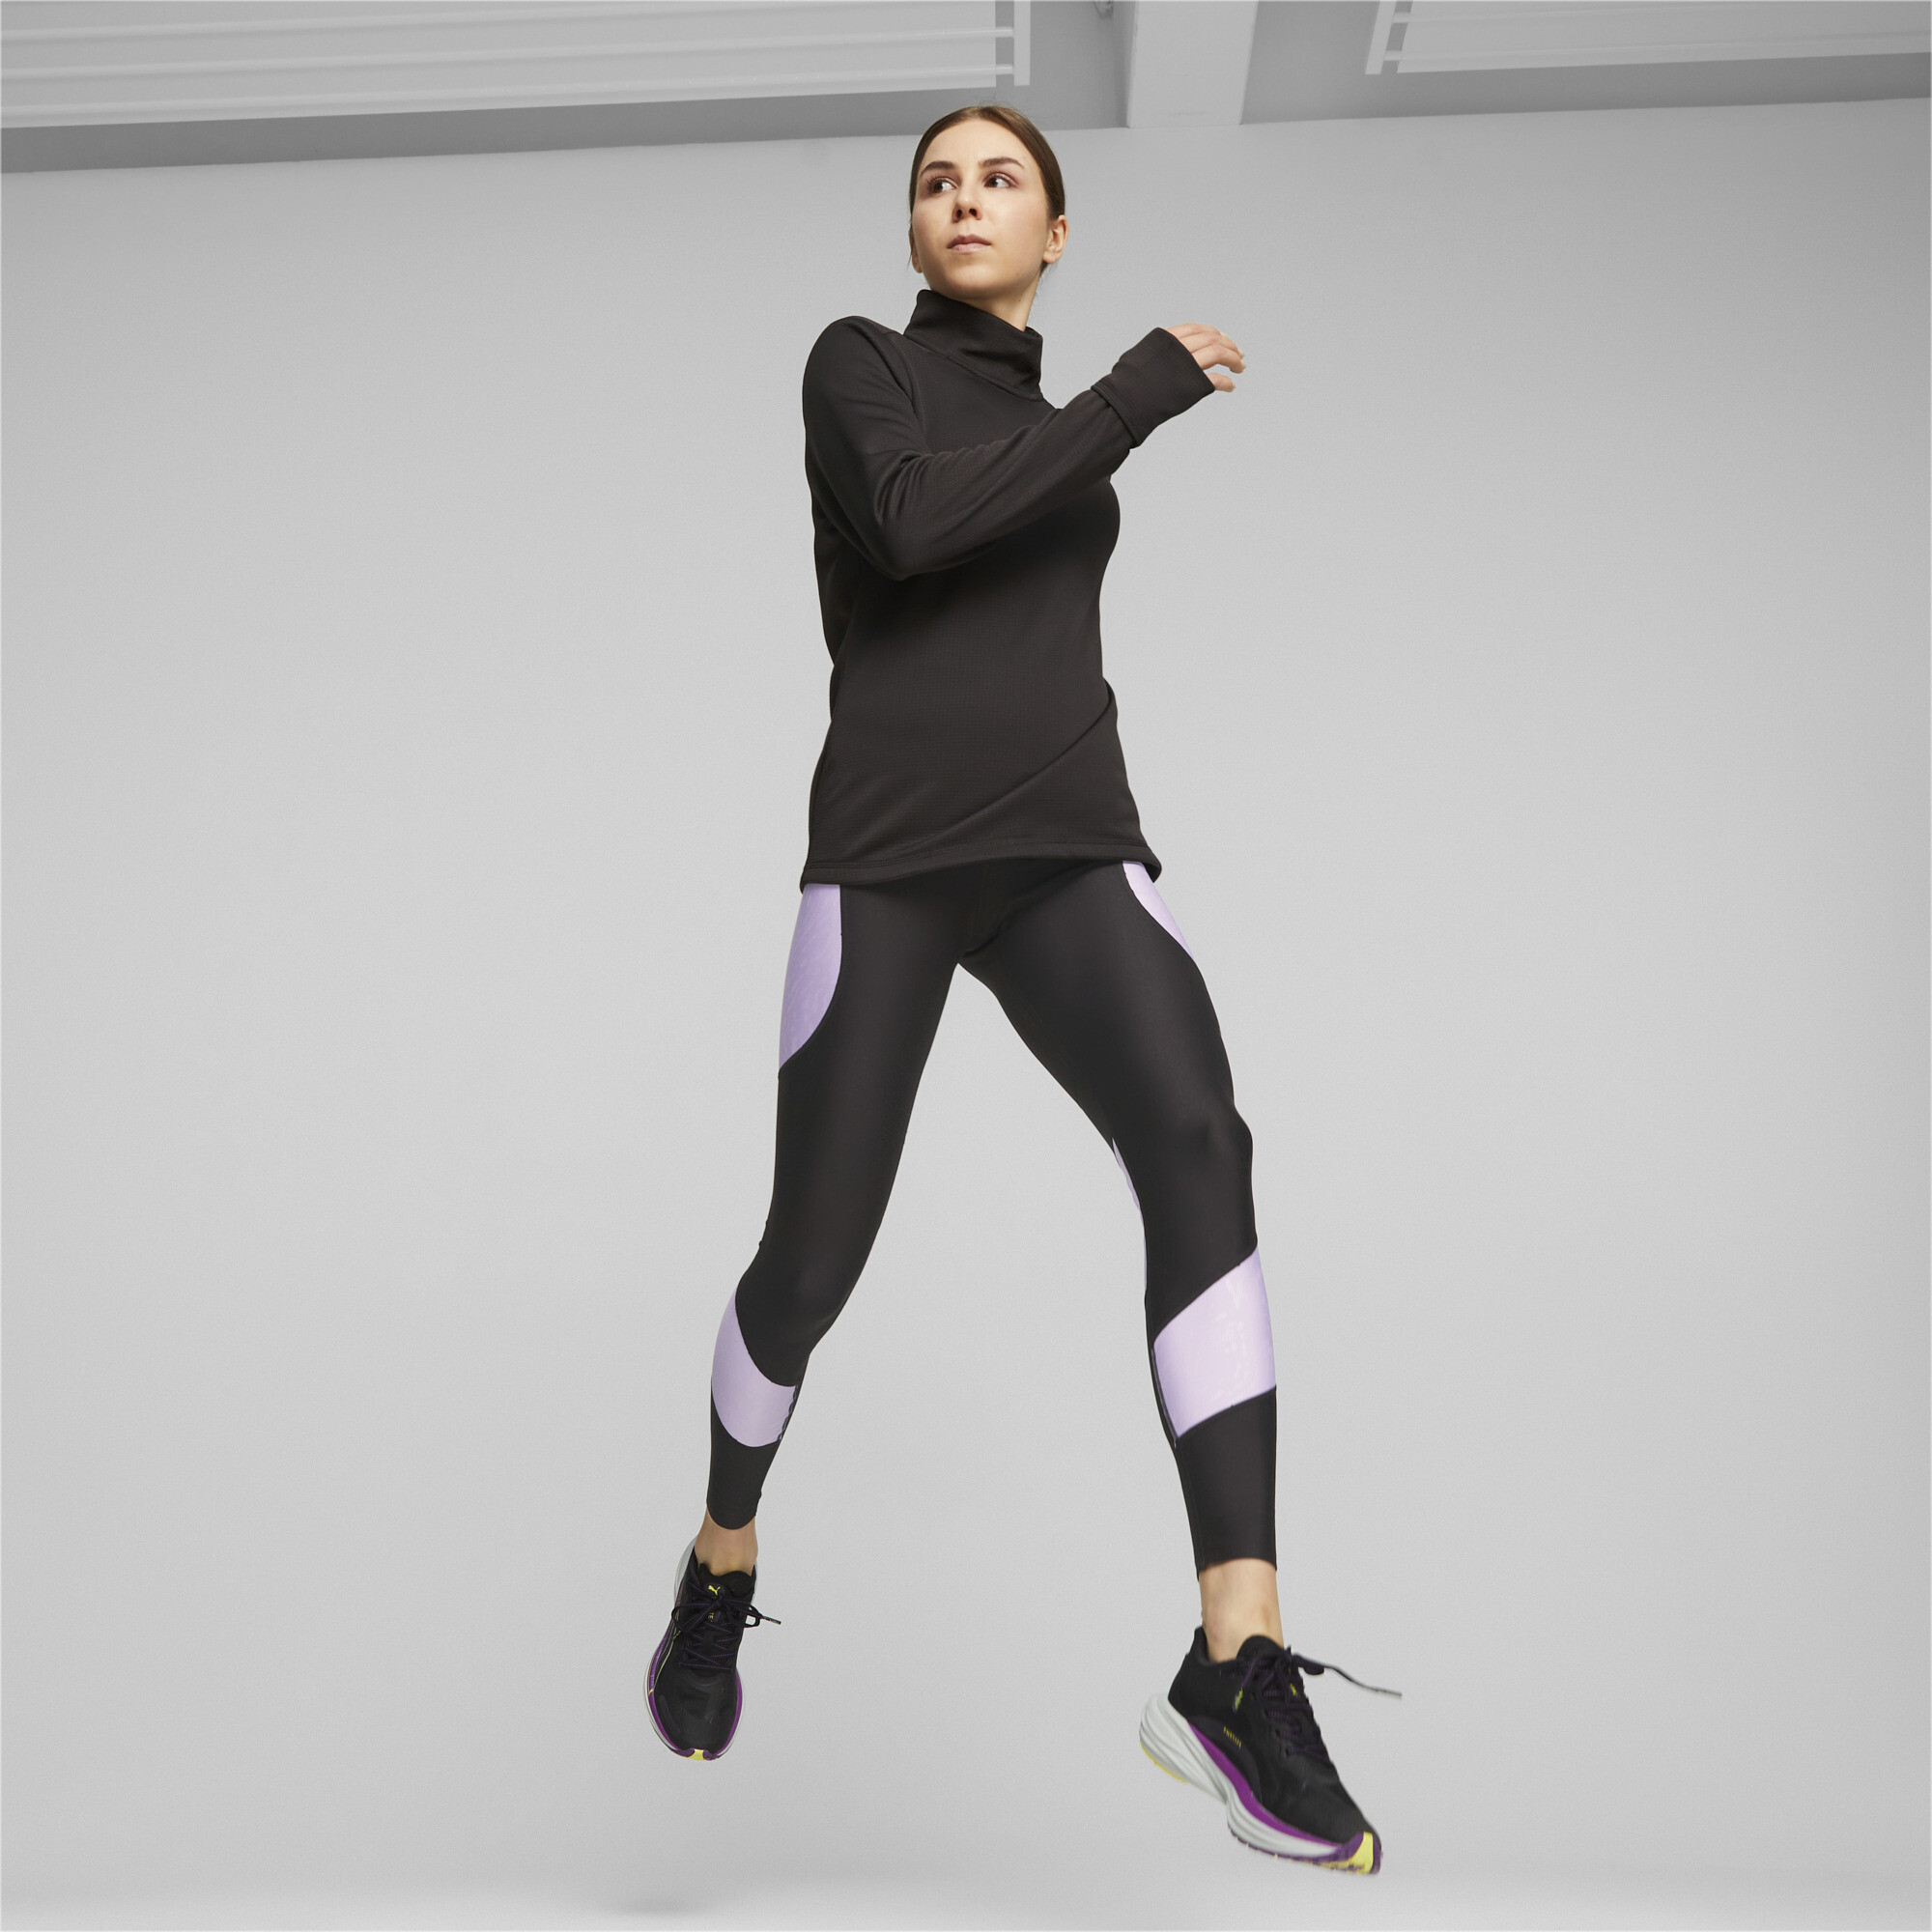 Women's PUMA Micro Fleece Running Pullover In Black, Size Medium